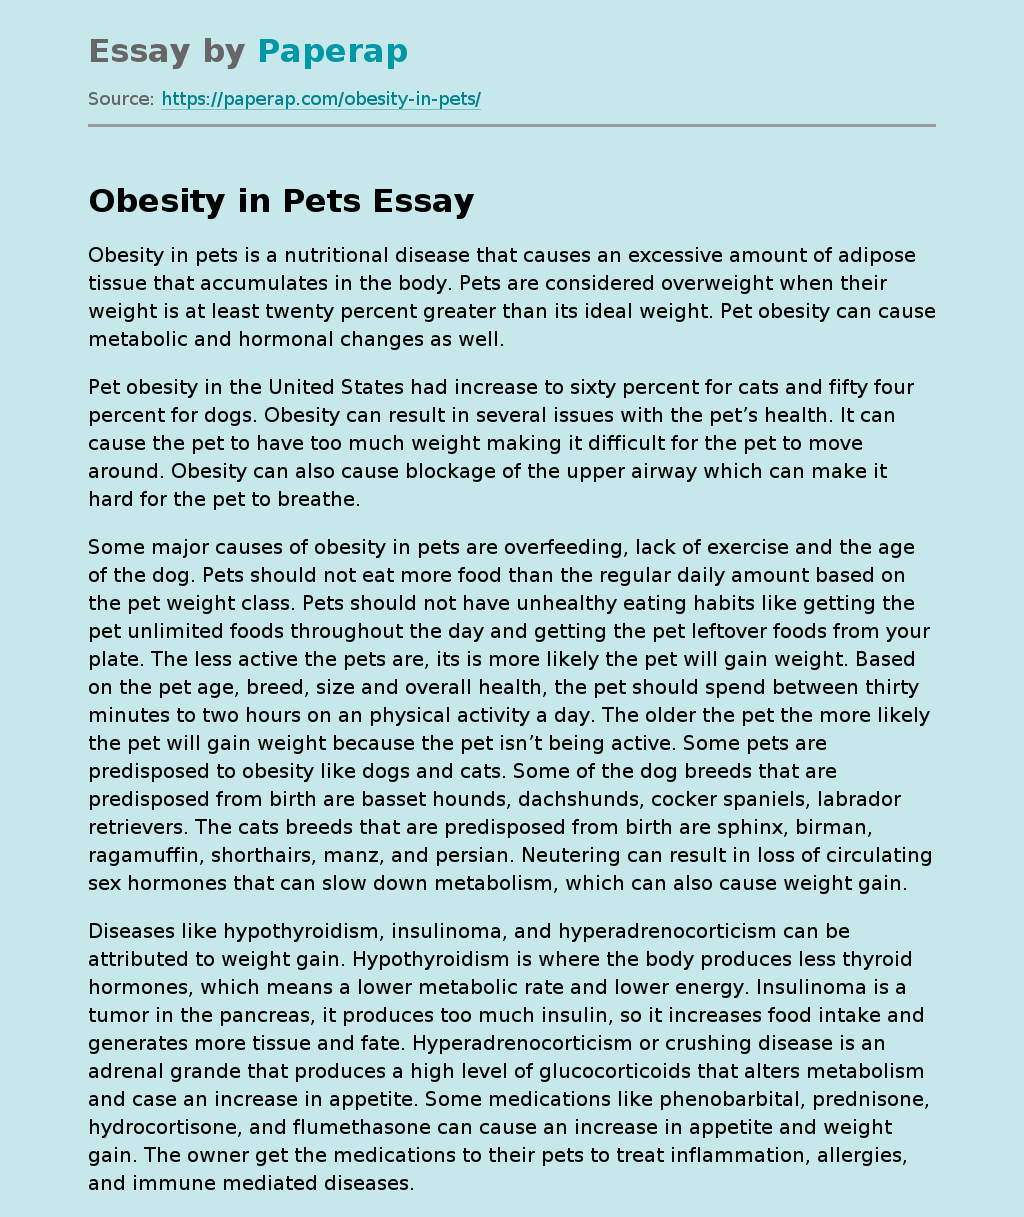 Obesity in Pets